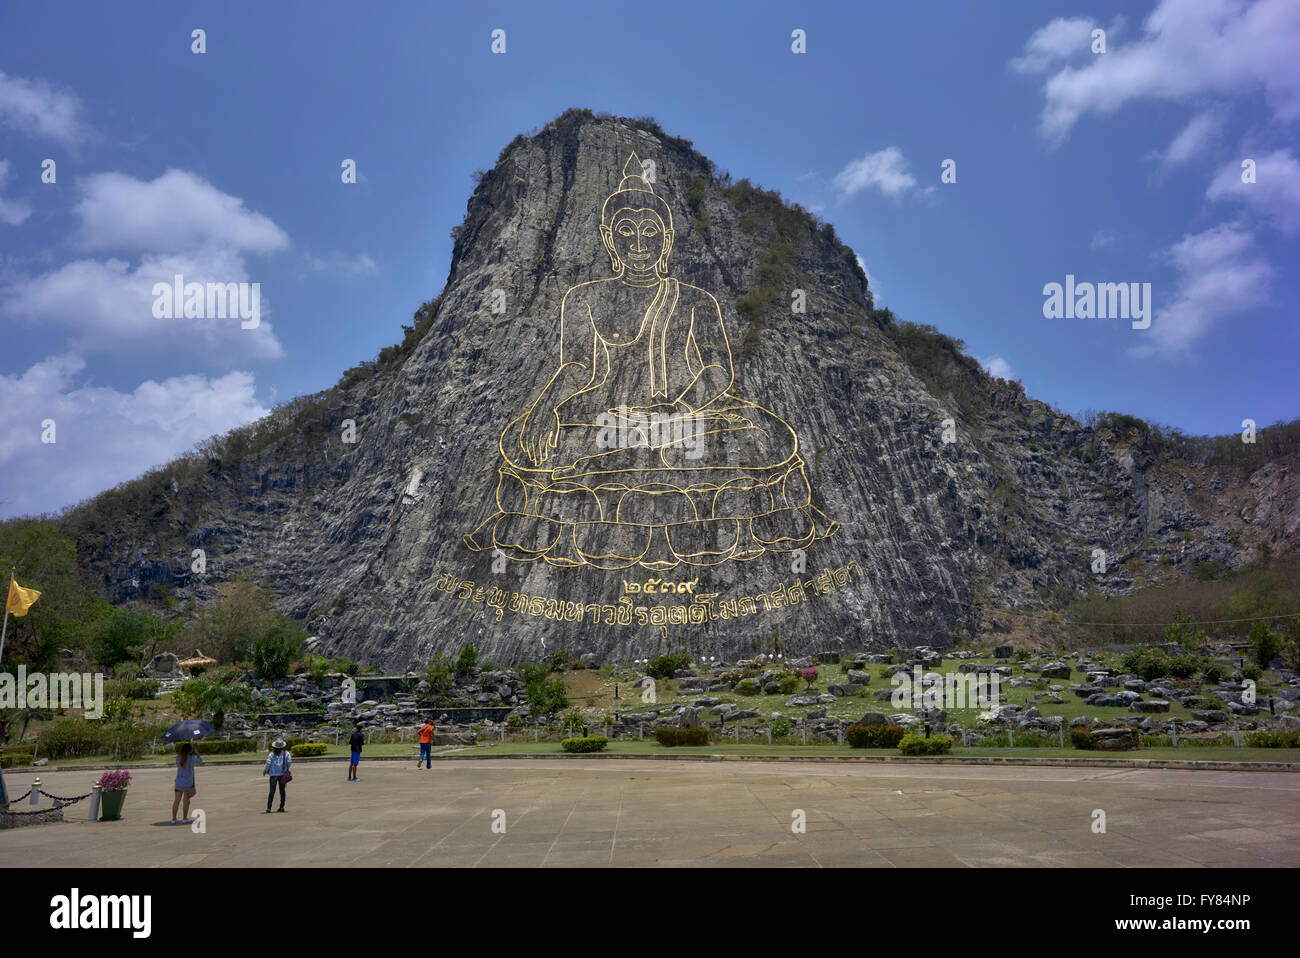 Khao Chee Chan montagna sacra con Buddha inciso. Pattaya Thailandia, S. E. Asia Foto Stock